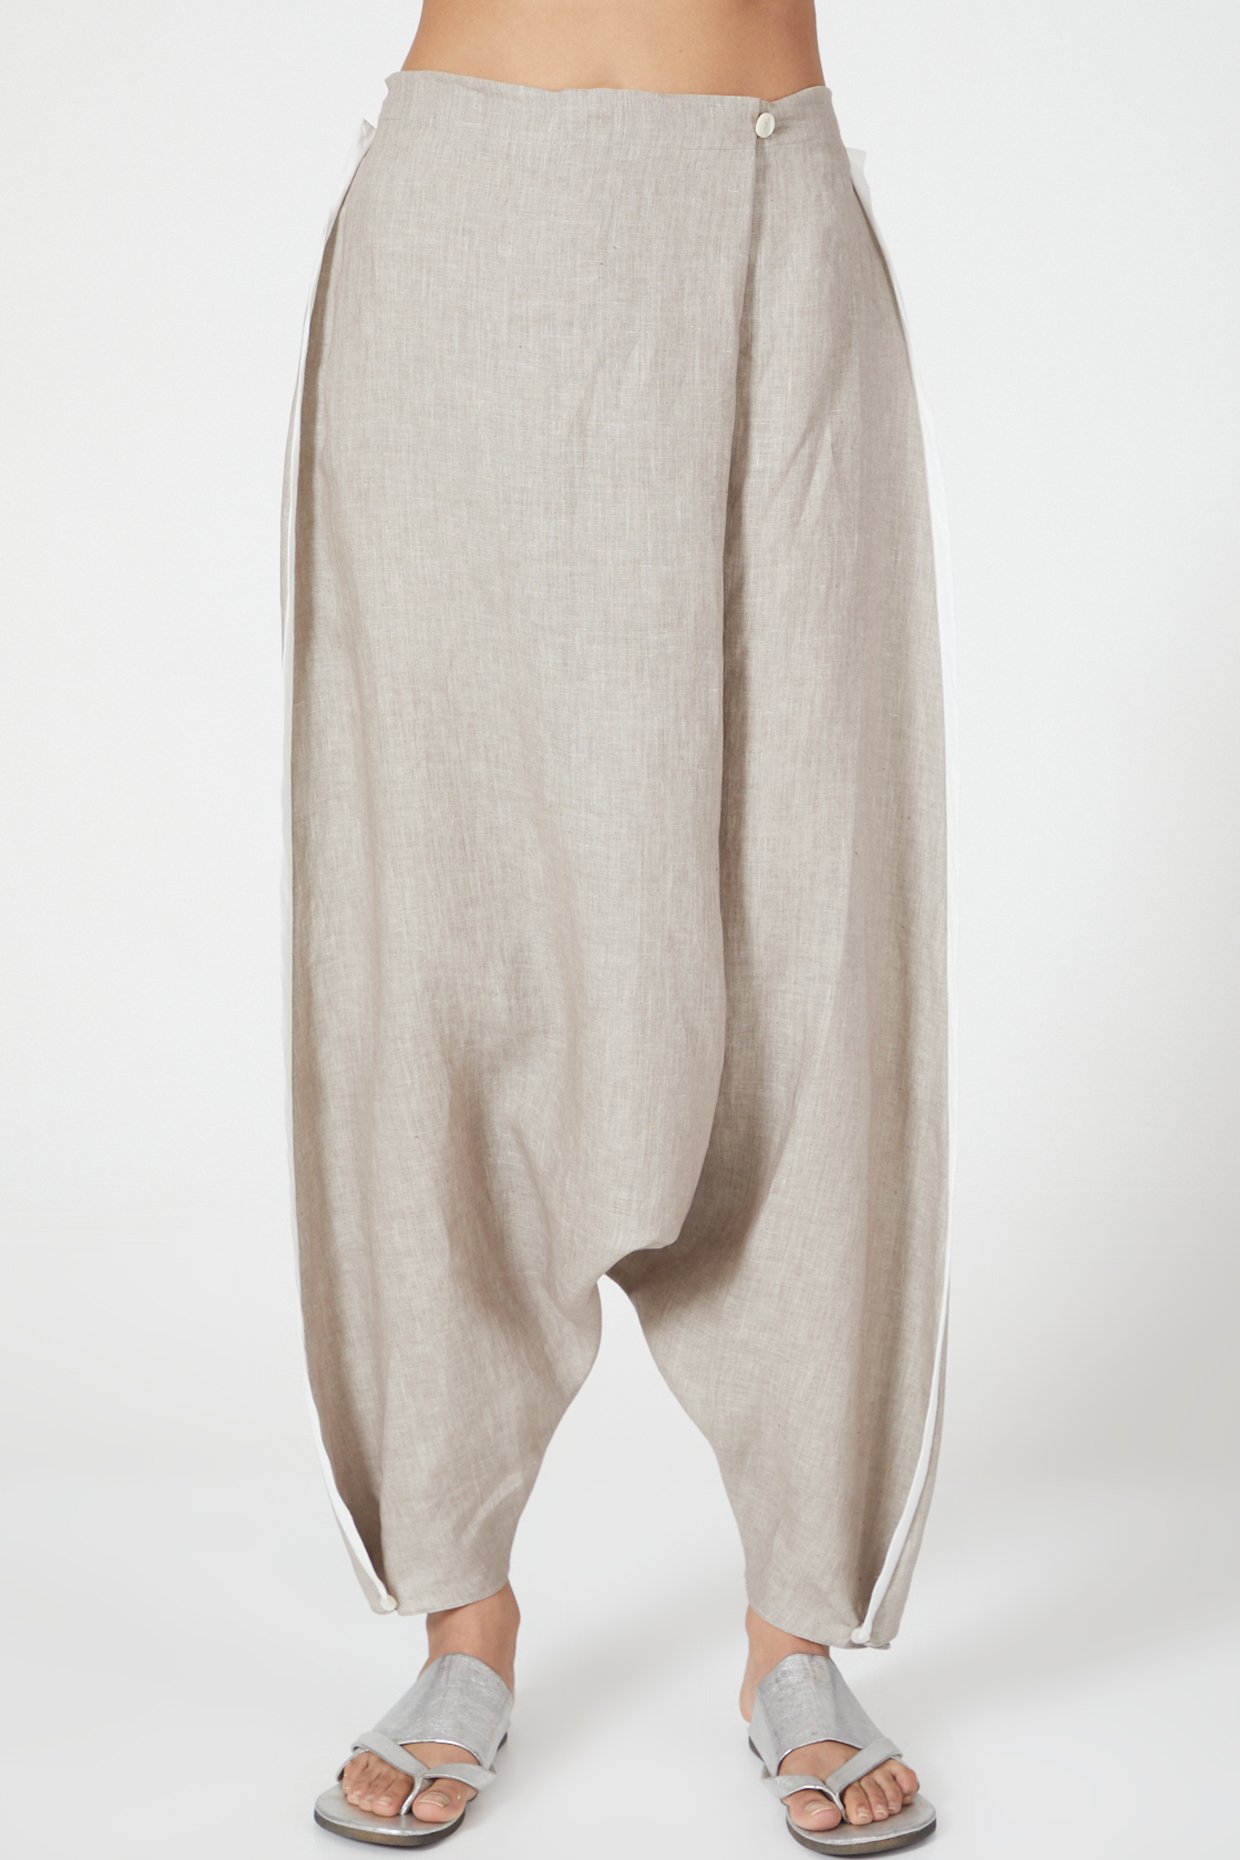 Indian Dobby Bottoms : Buy Indian Dobby Low Crotch Harem Pants - Grey Online  | Nykaa Fashion.